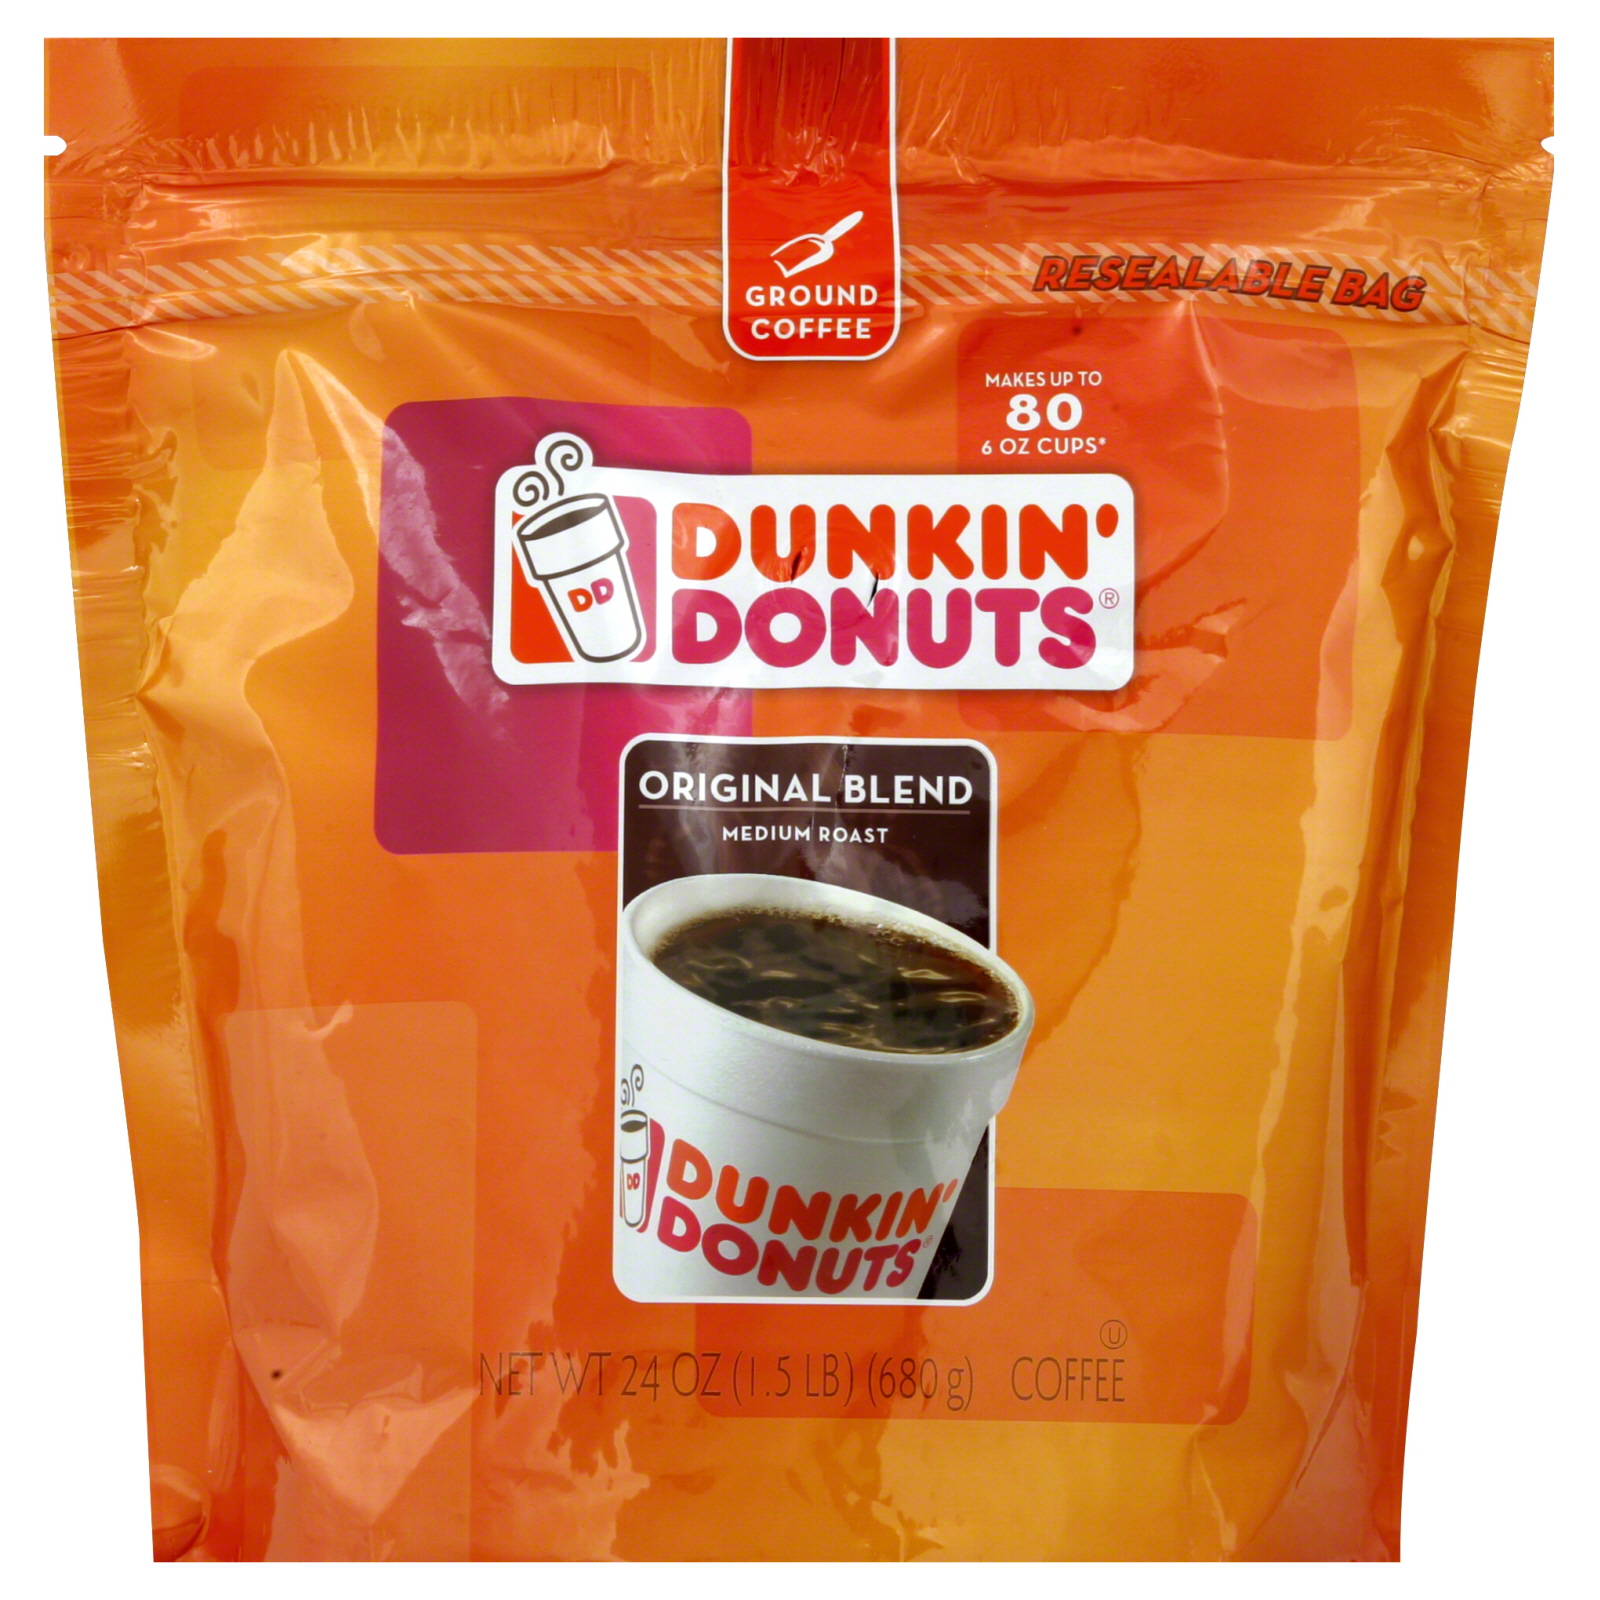 Dunkin' Donuts Coffee, Ground, Original Blend, Medium Roast, 24 oz (1.5 lb) 680 g